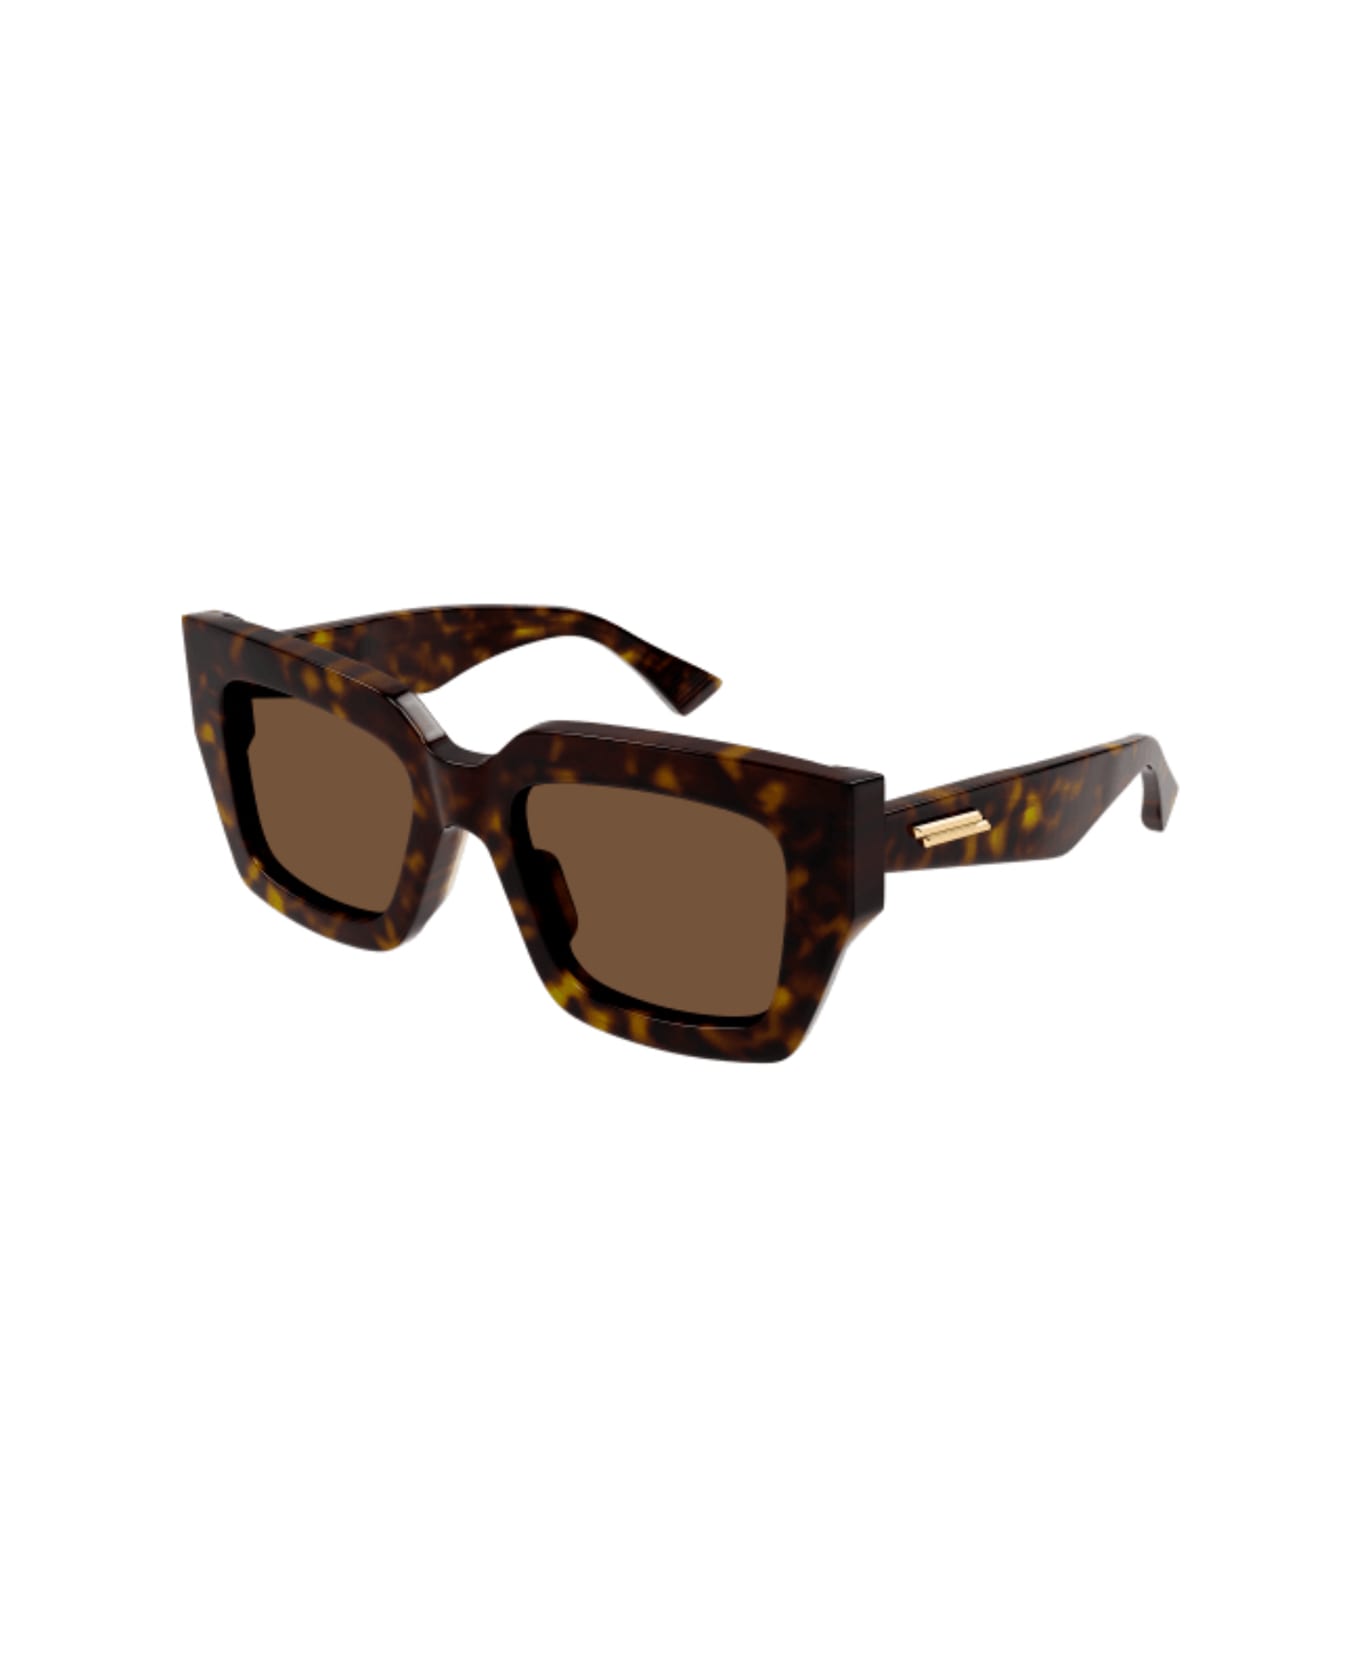 Bottega Veneta Eyewear Bv1212s 002 Sunglasses - Marrone